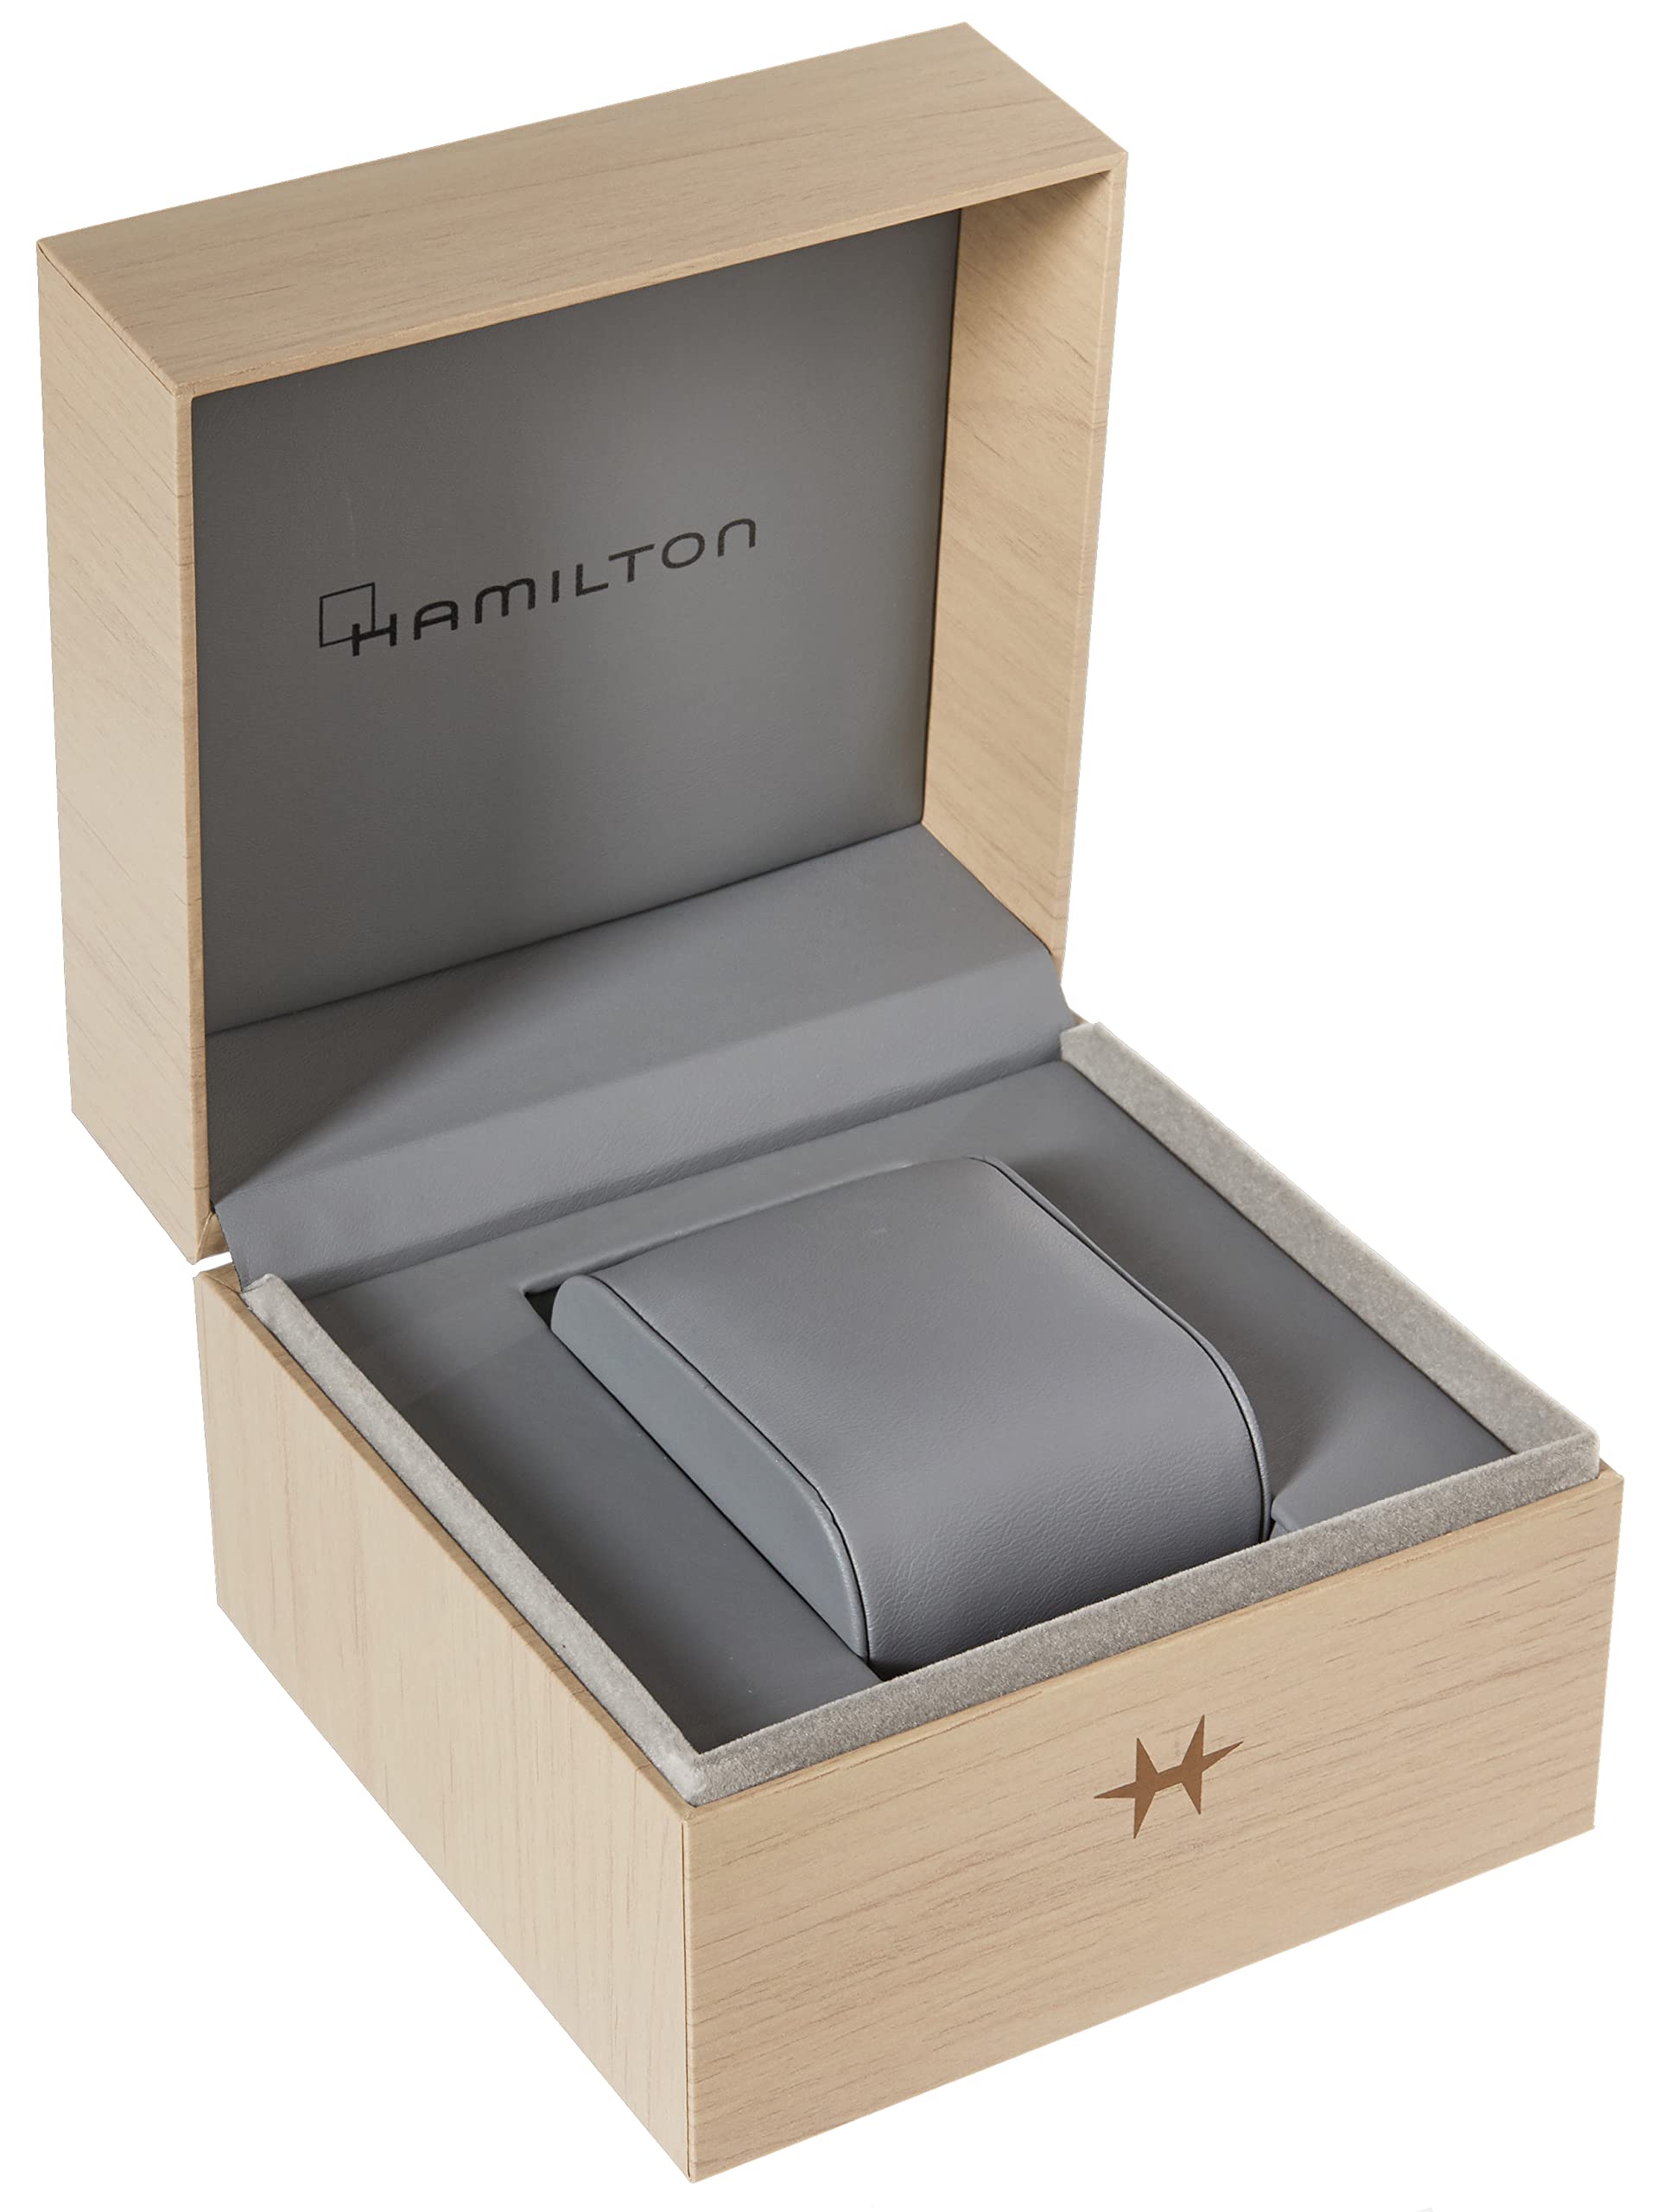 Hamilton Watch American Classic Ardmore Swiss Quartz Watch 18.7mm x 27mm Case, Silver Dial, Beige Leather Strap (Model: H11221514)